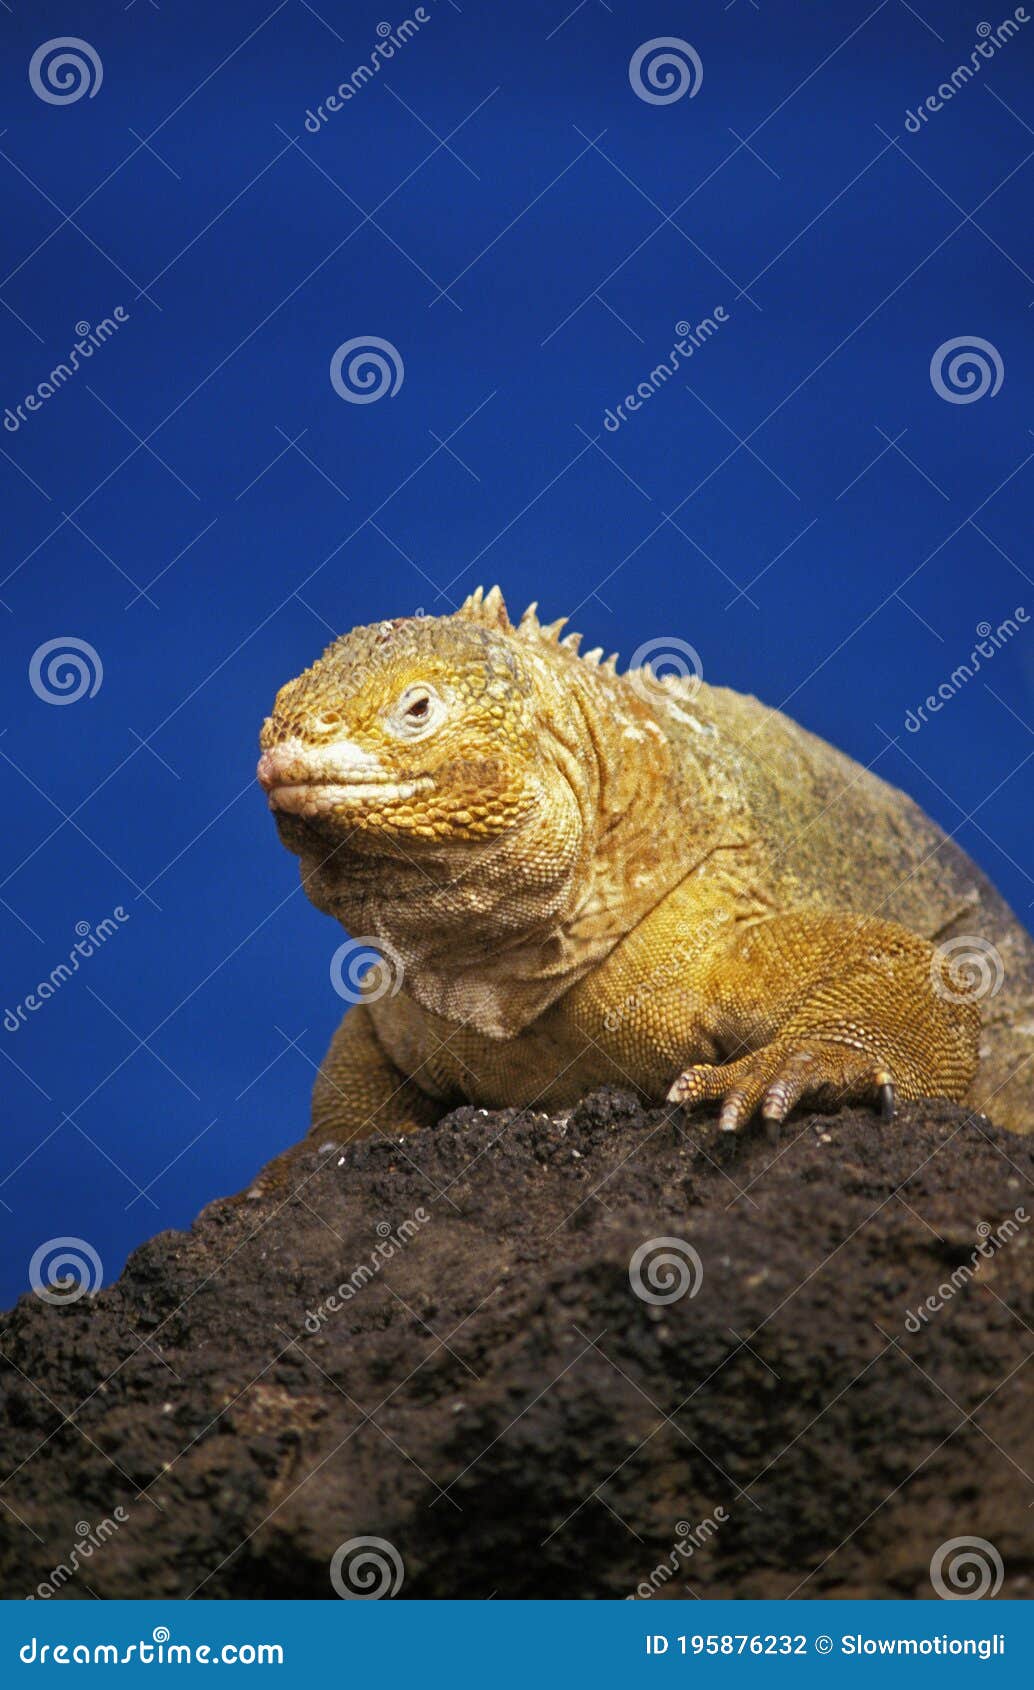 galapagos land iguana, conolophus subcristatus, adult standing on rocks, galapagos islands